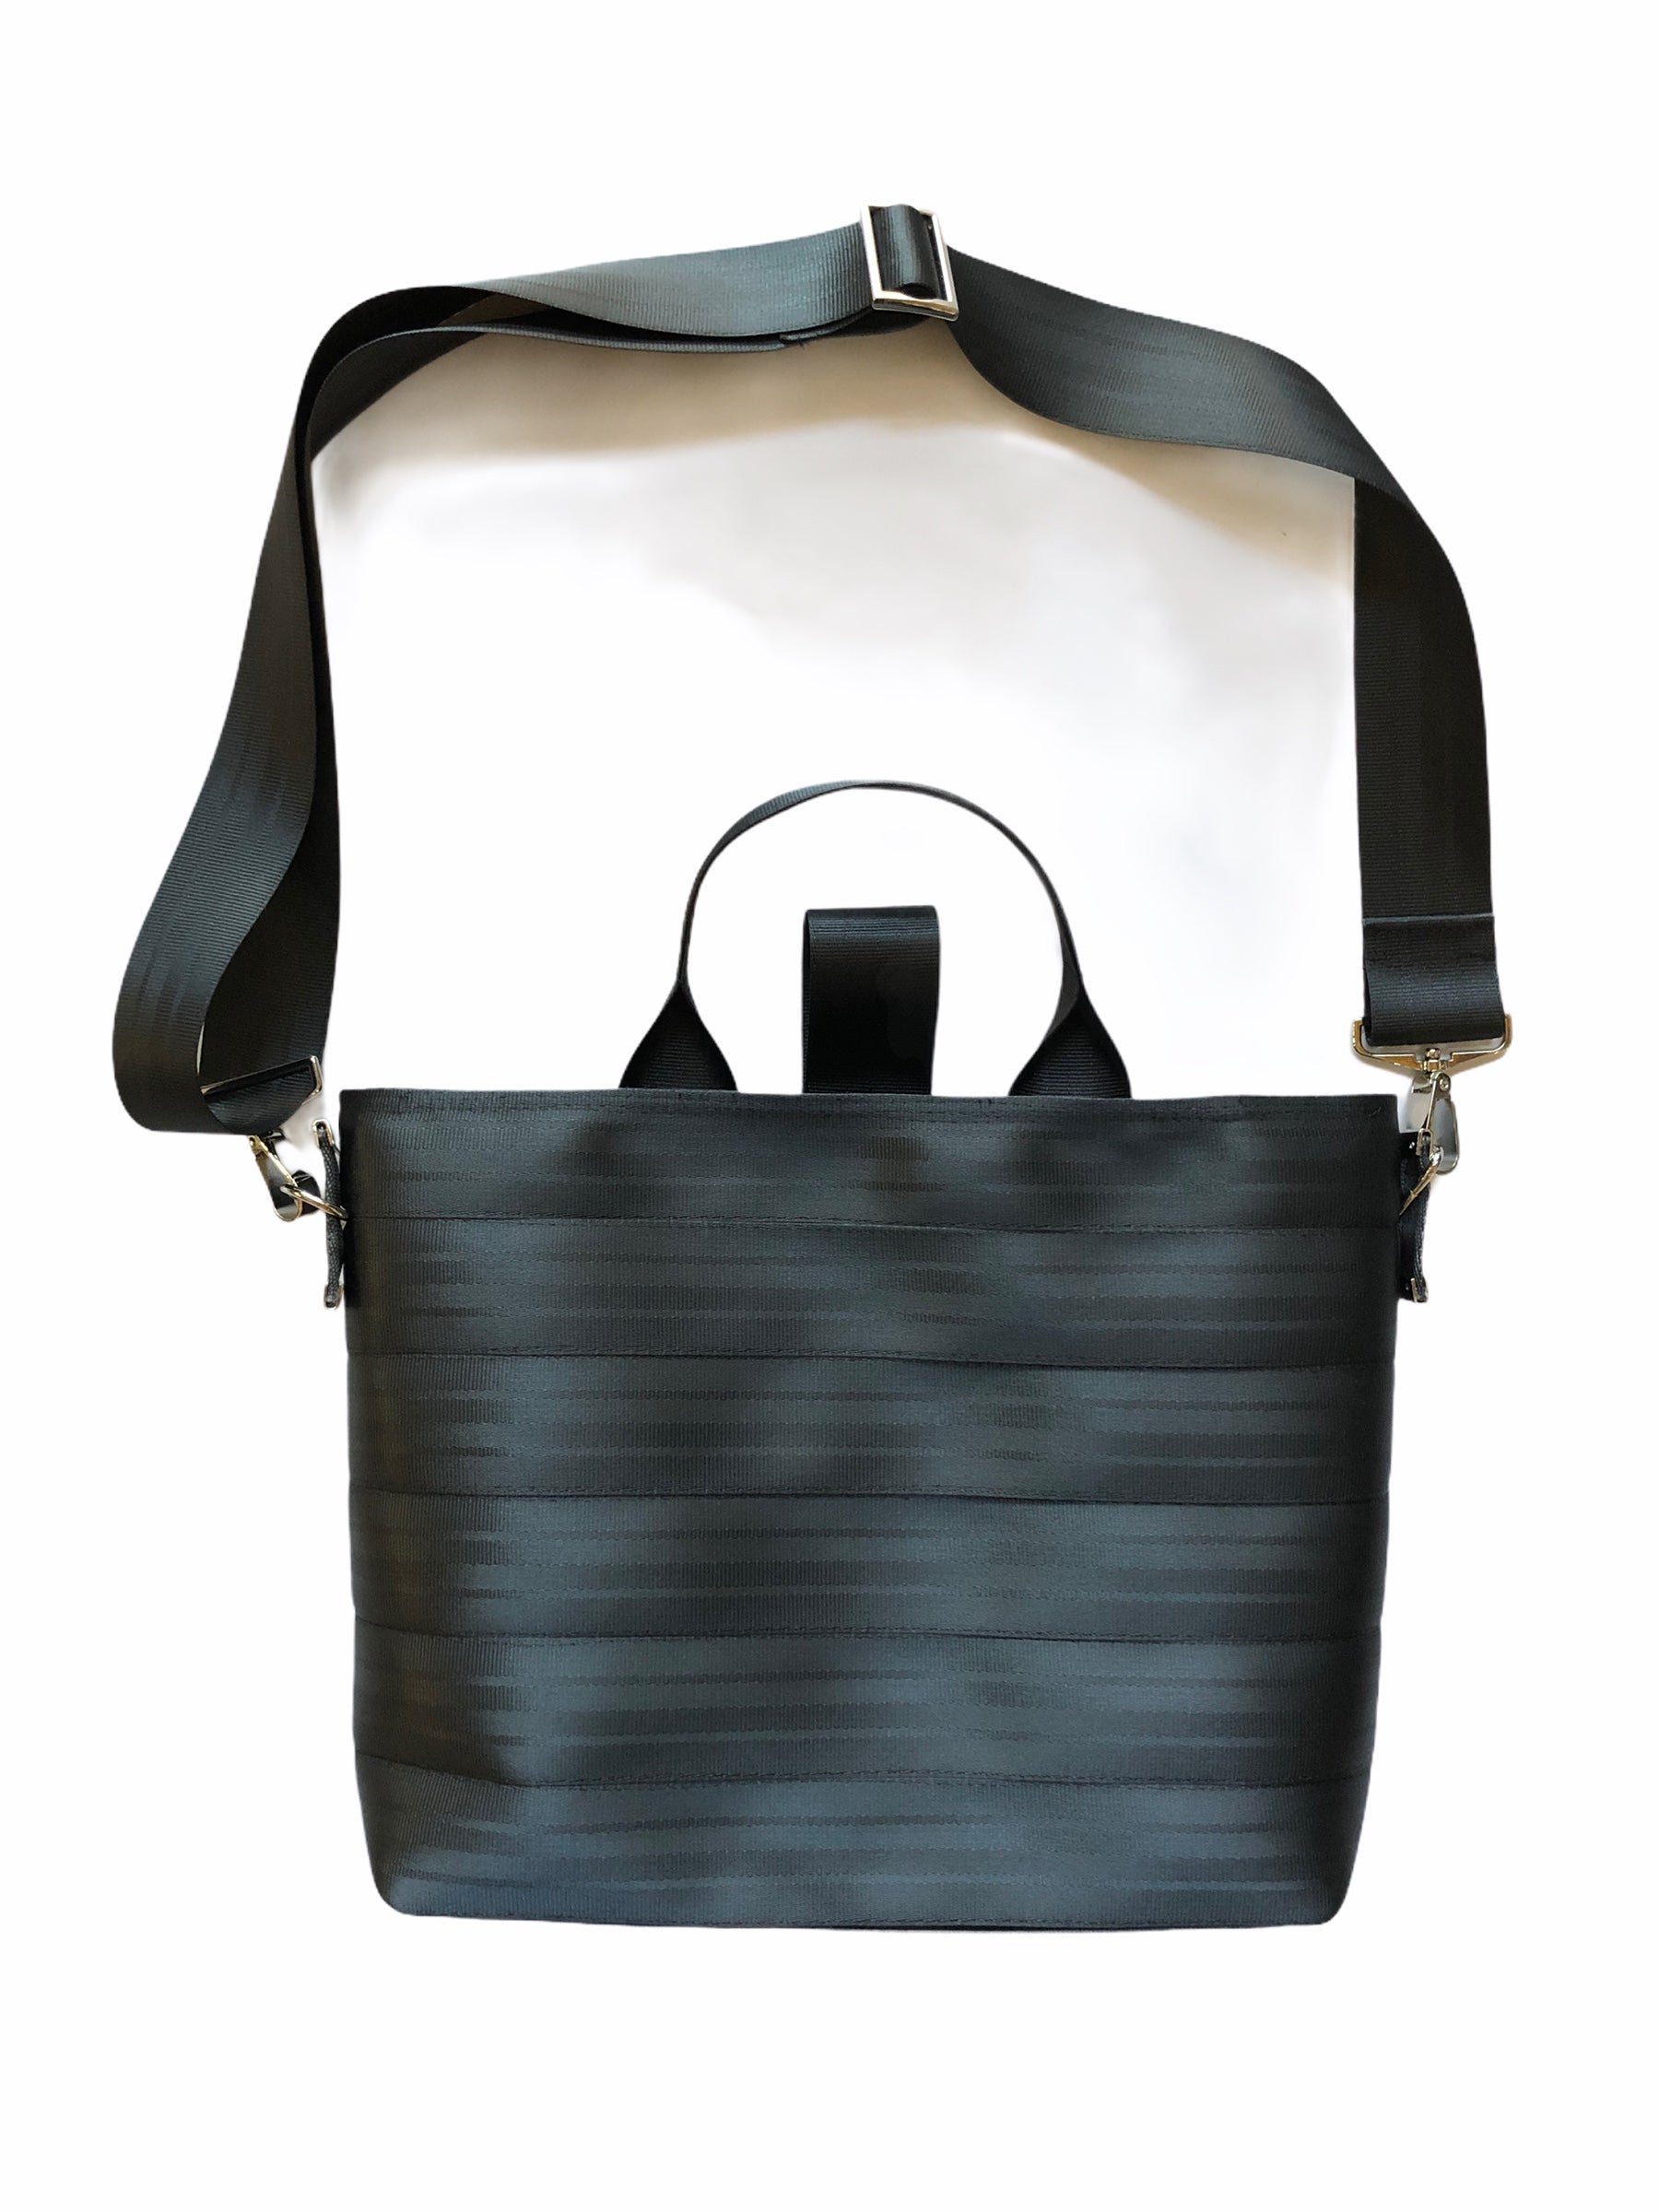 Harveys Seatbelt Bag Clean | TikTok